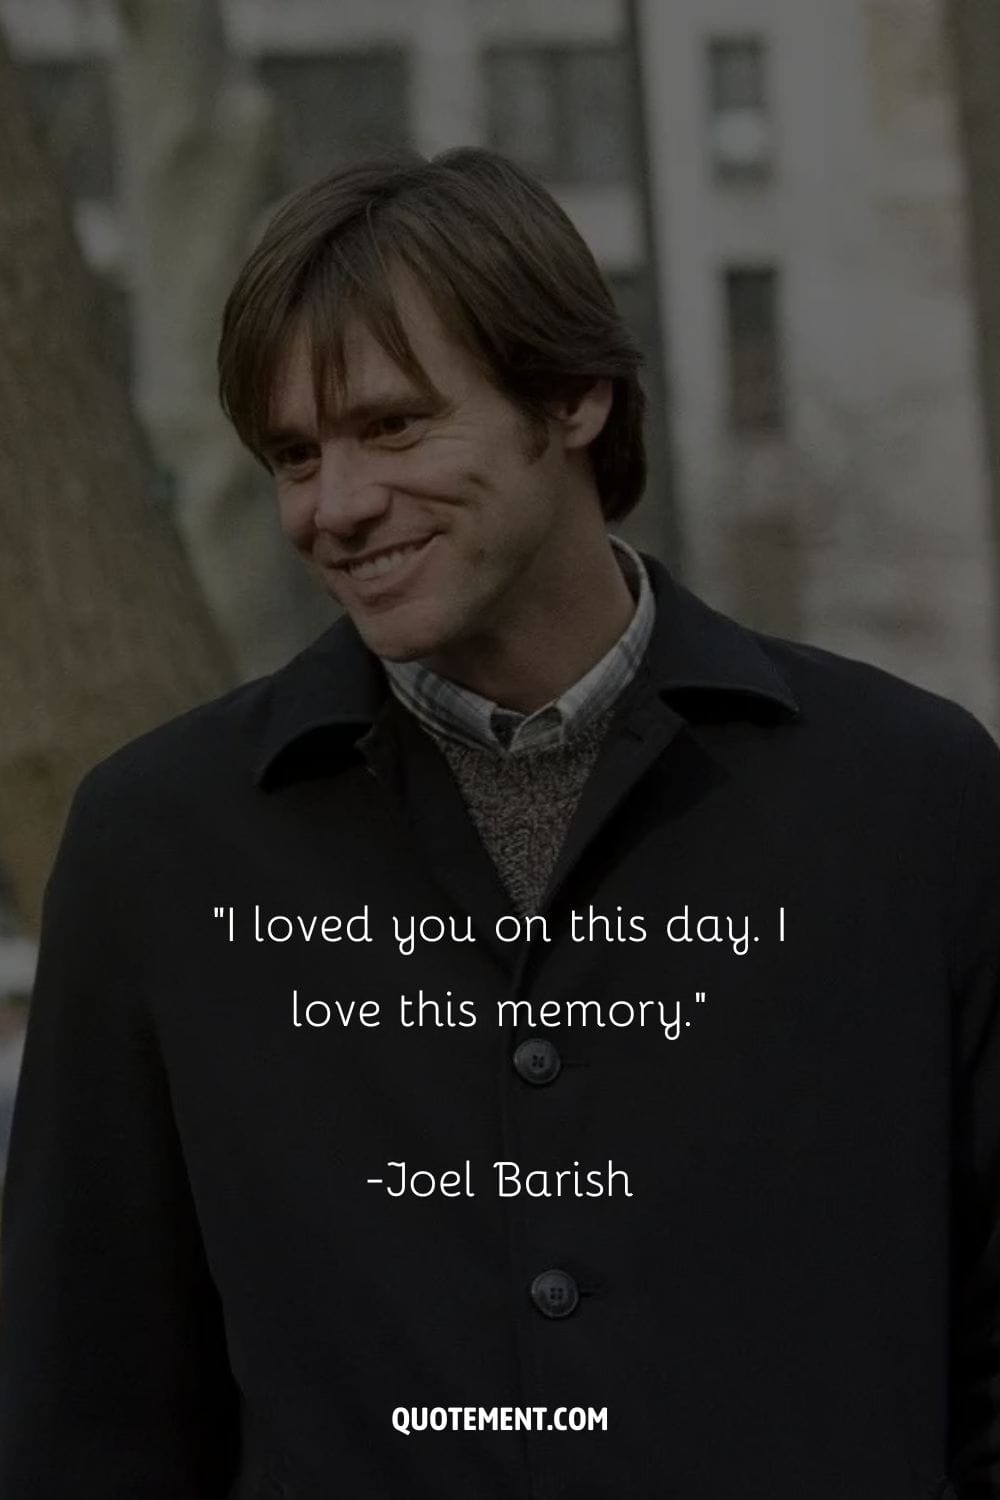 jim Carrey's poignant portrayal of Joel Barish.